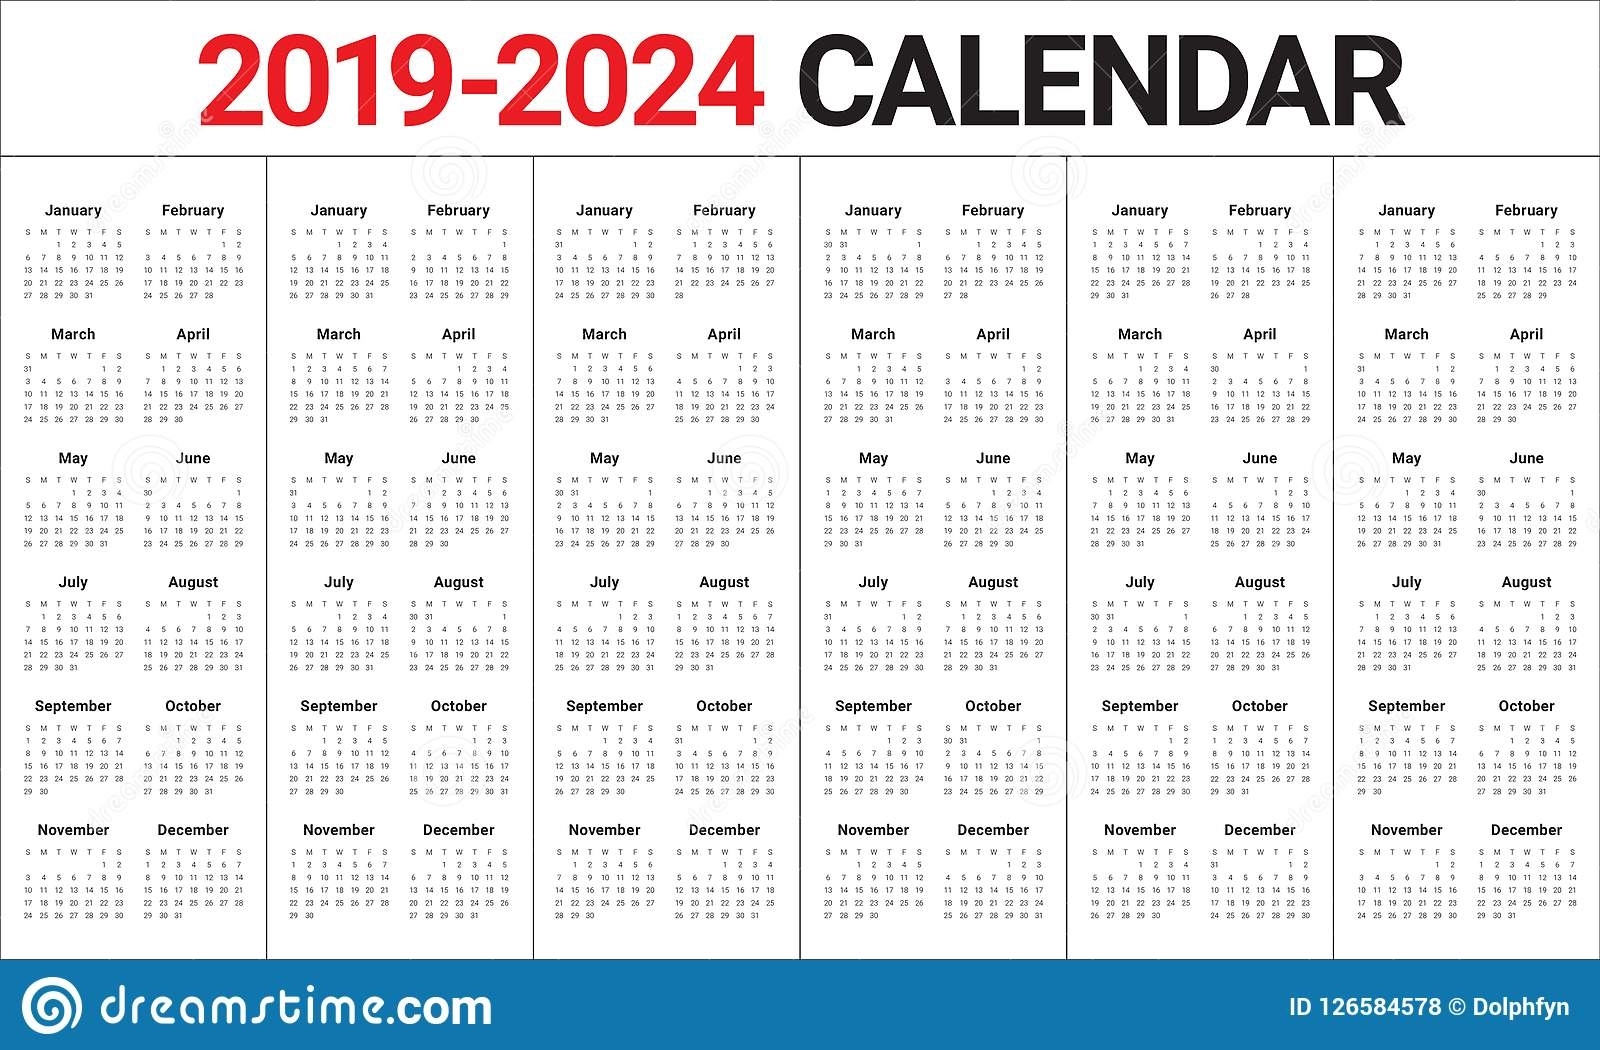 2021 2024 Calendar 2021 2022 2023 2024 Calendar / Calendar Set In